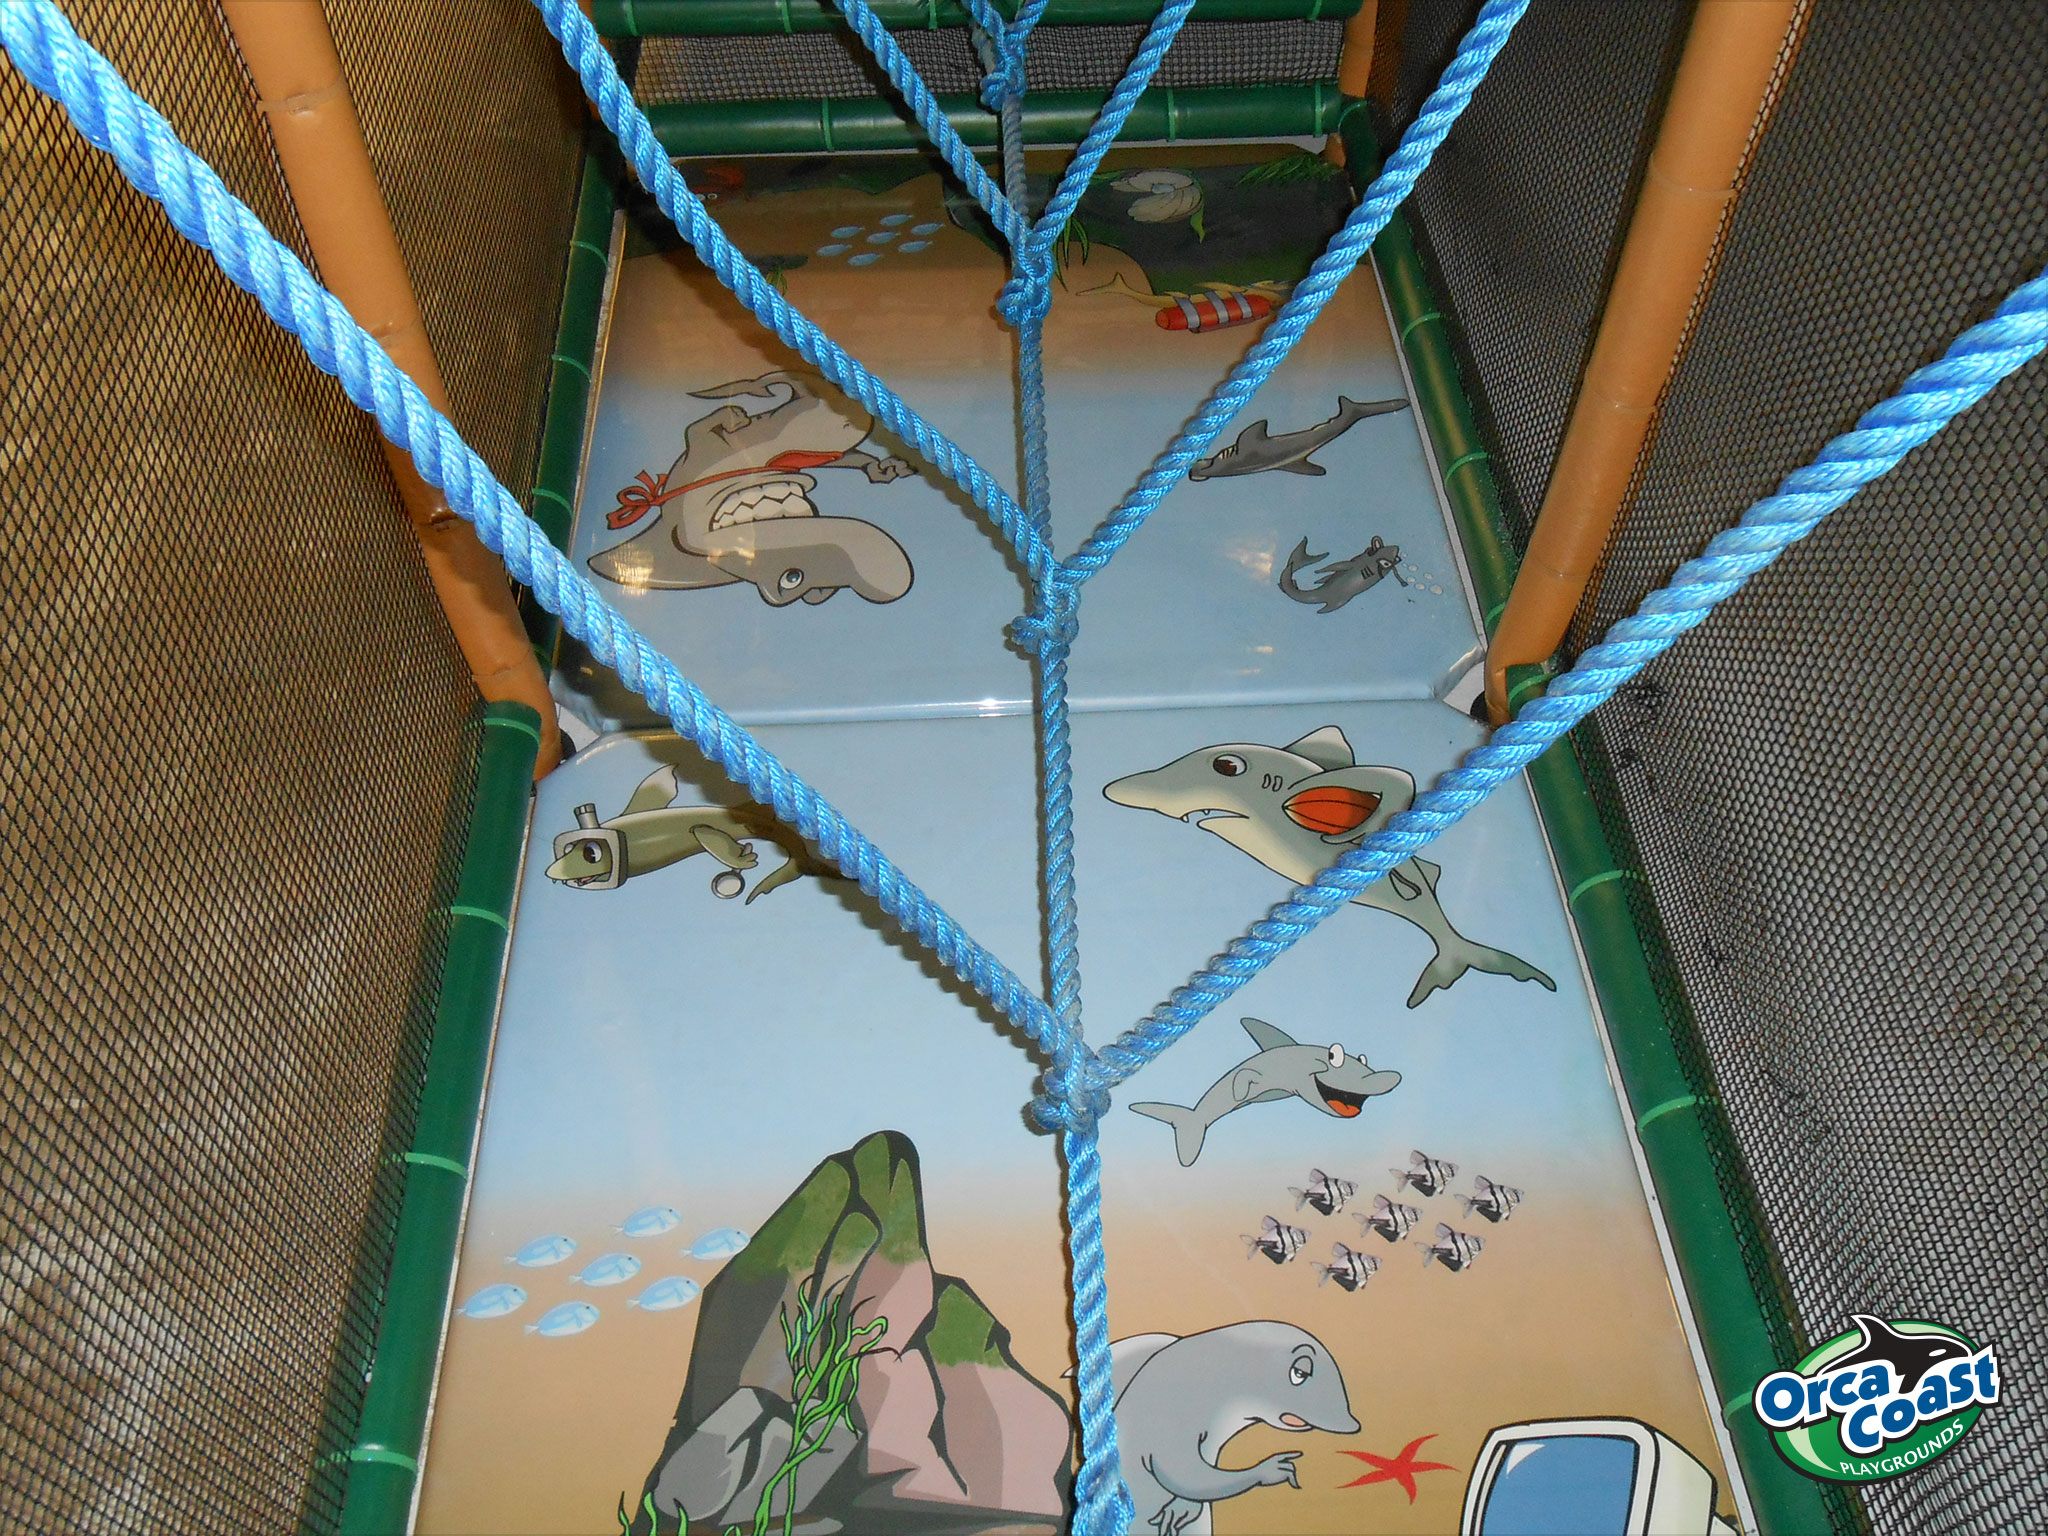 Safari Run, an indoor playground in Sunnyvale, CA